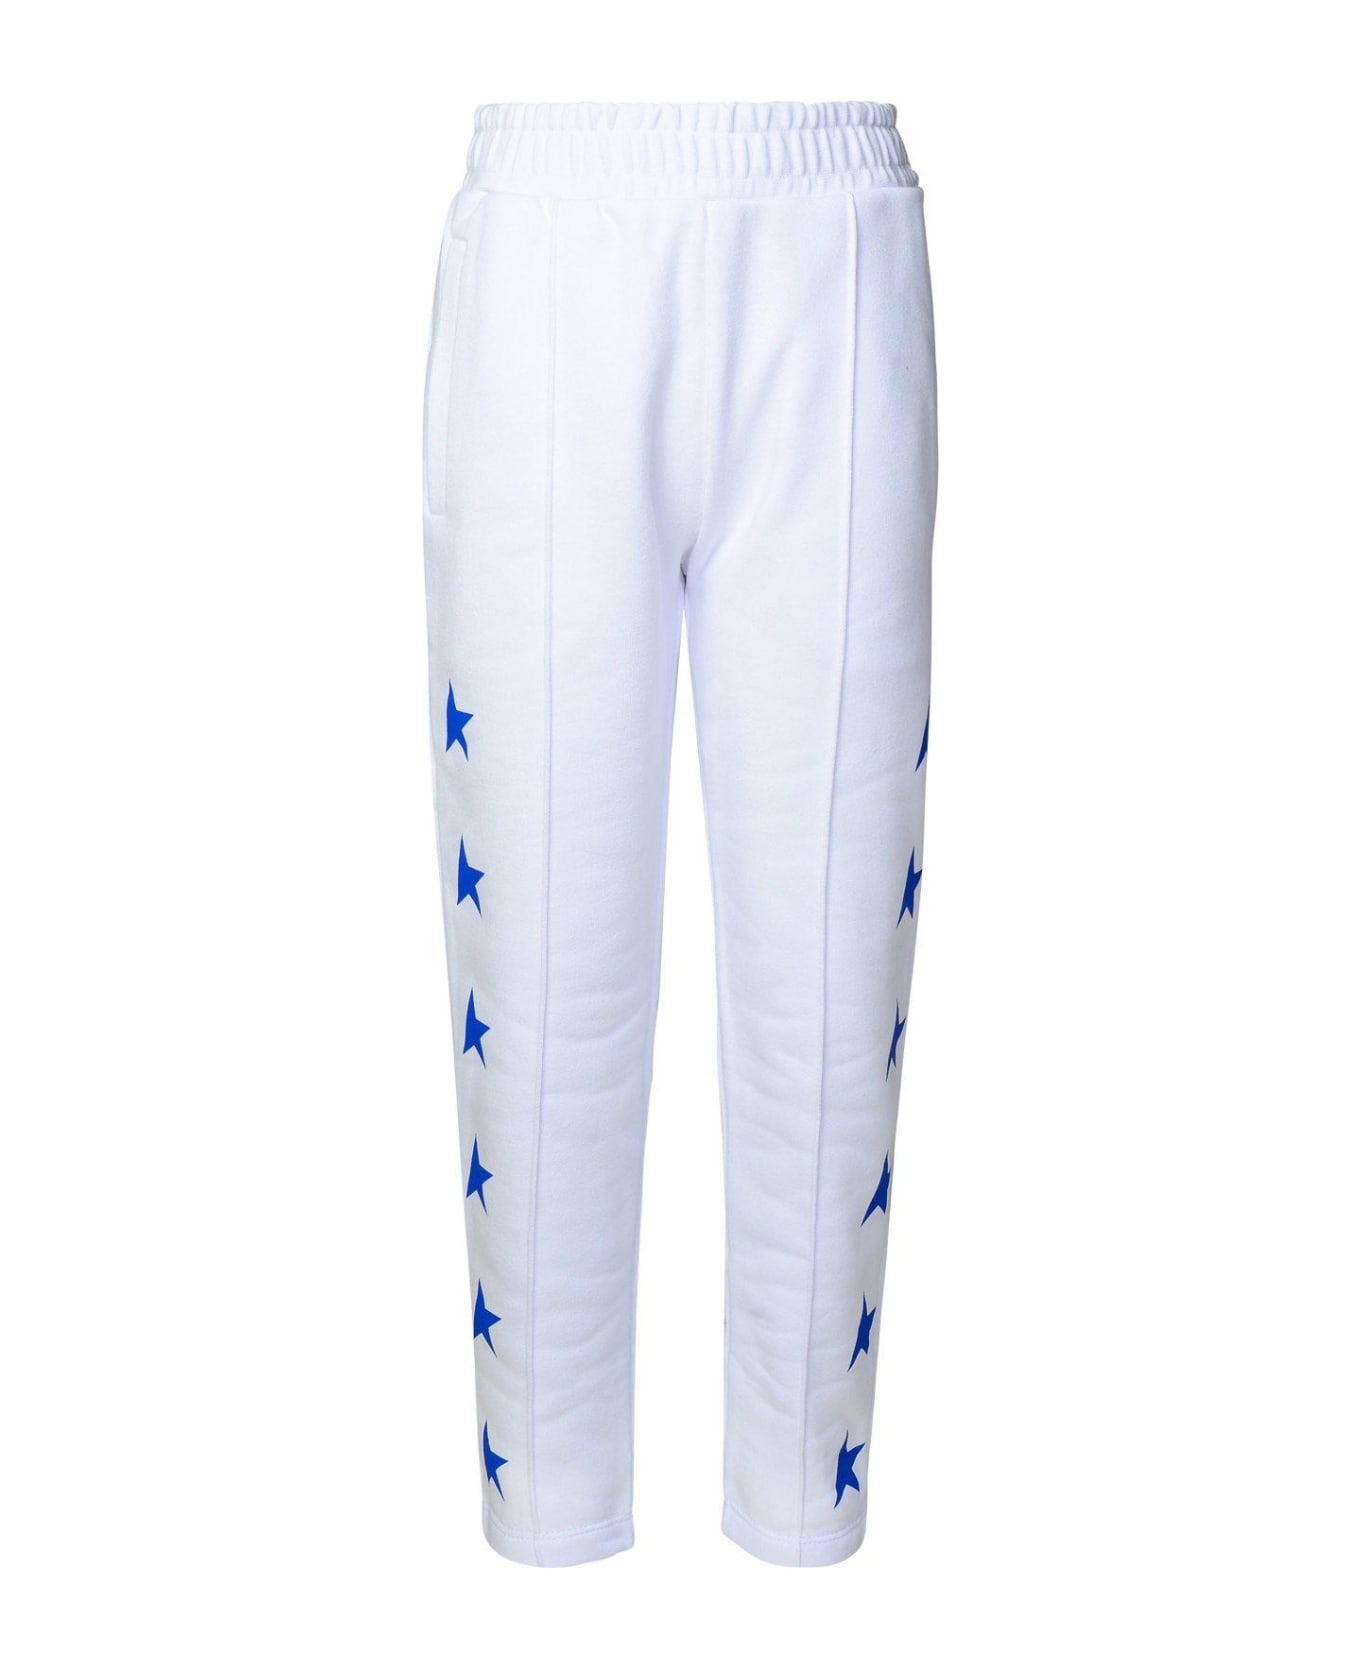 Golden Goose Star Printed Track Pants - WHITE/ BLUE ROYAL